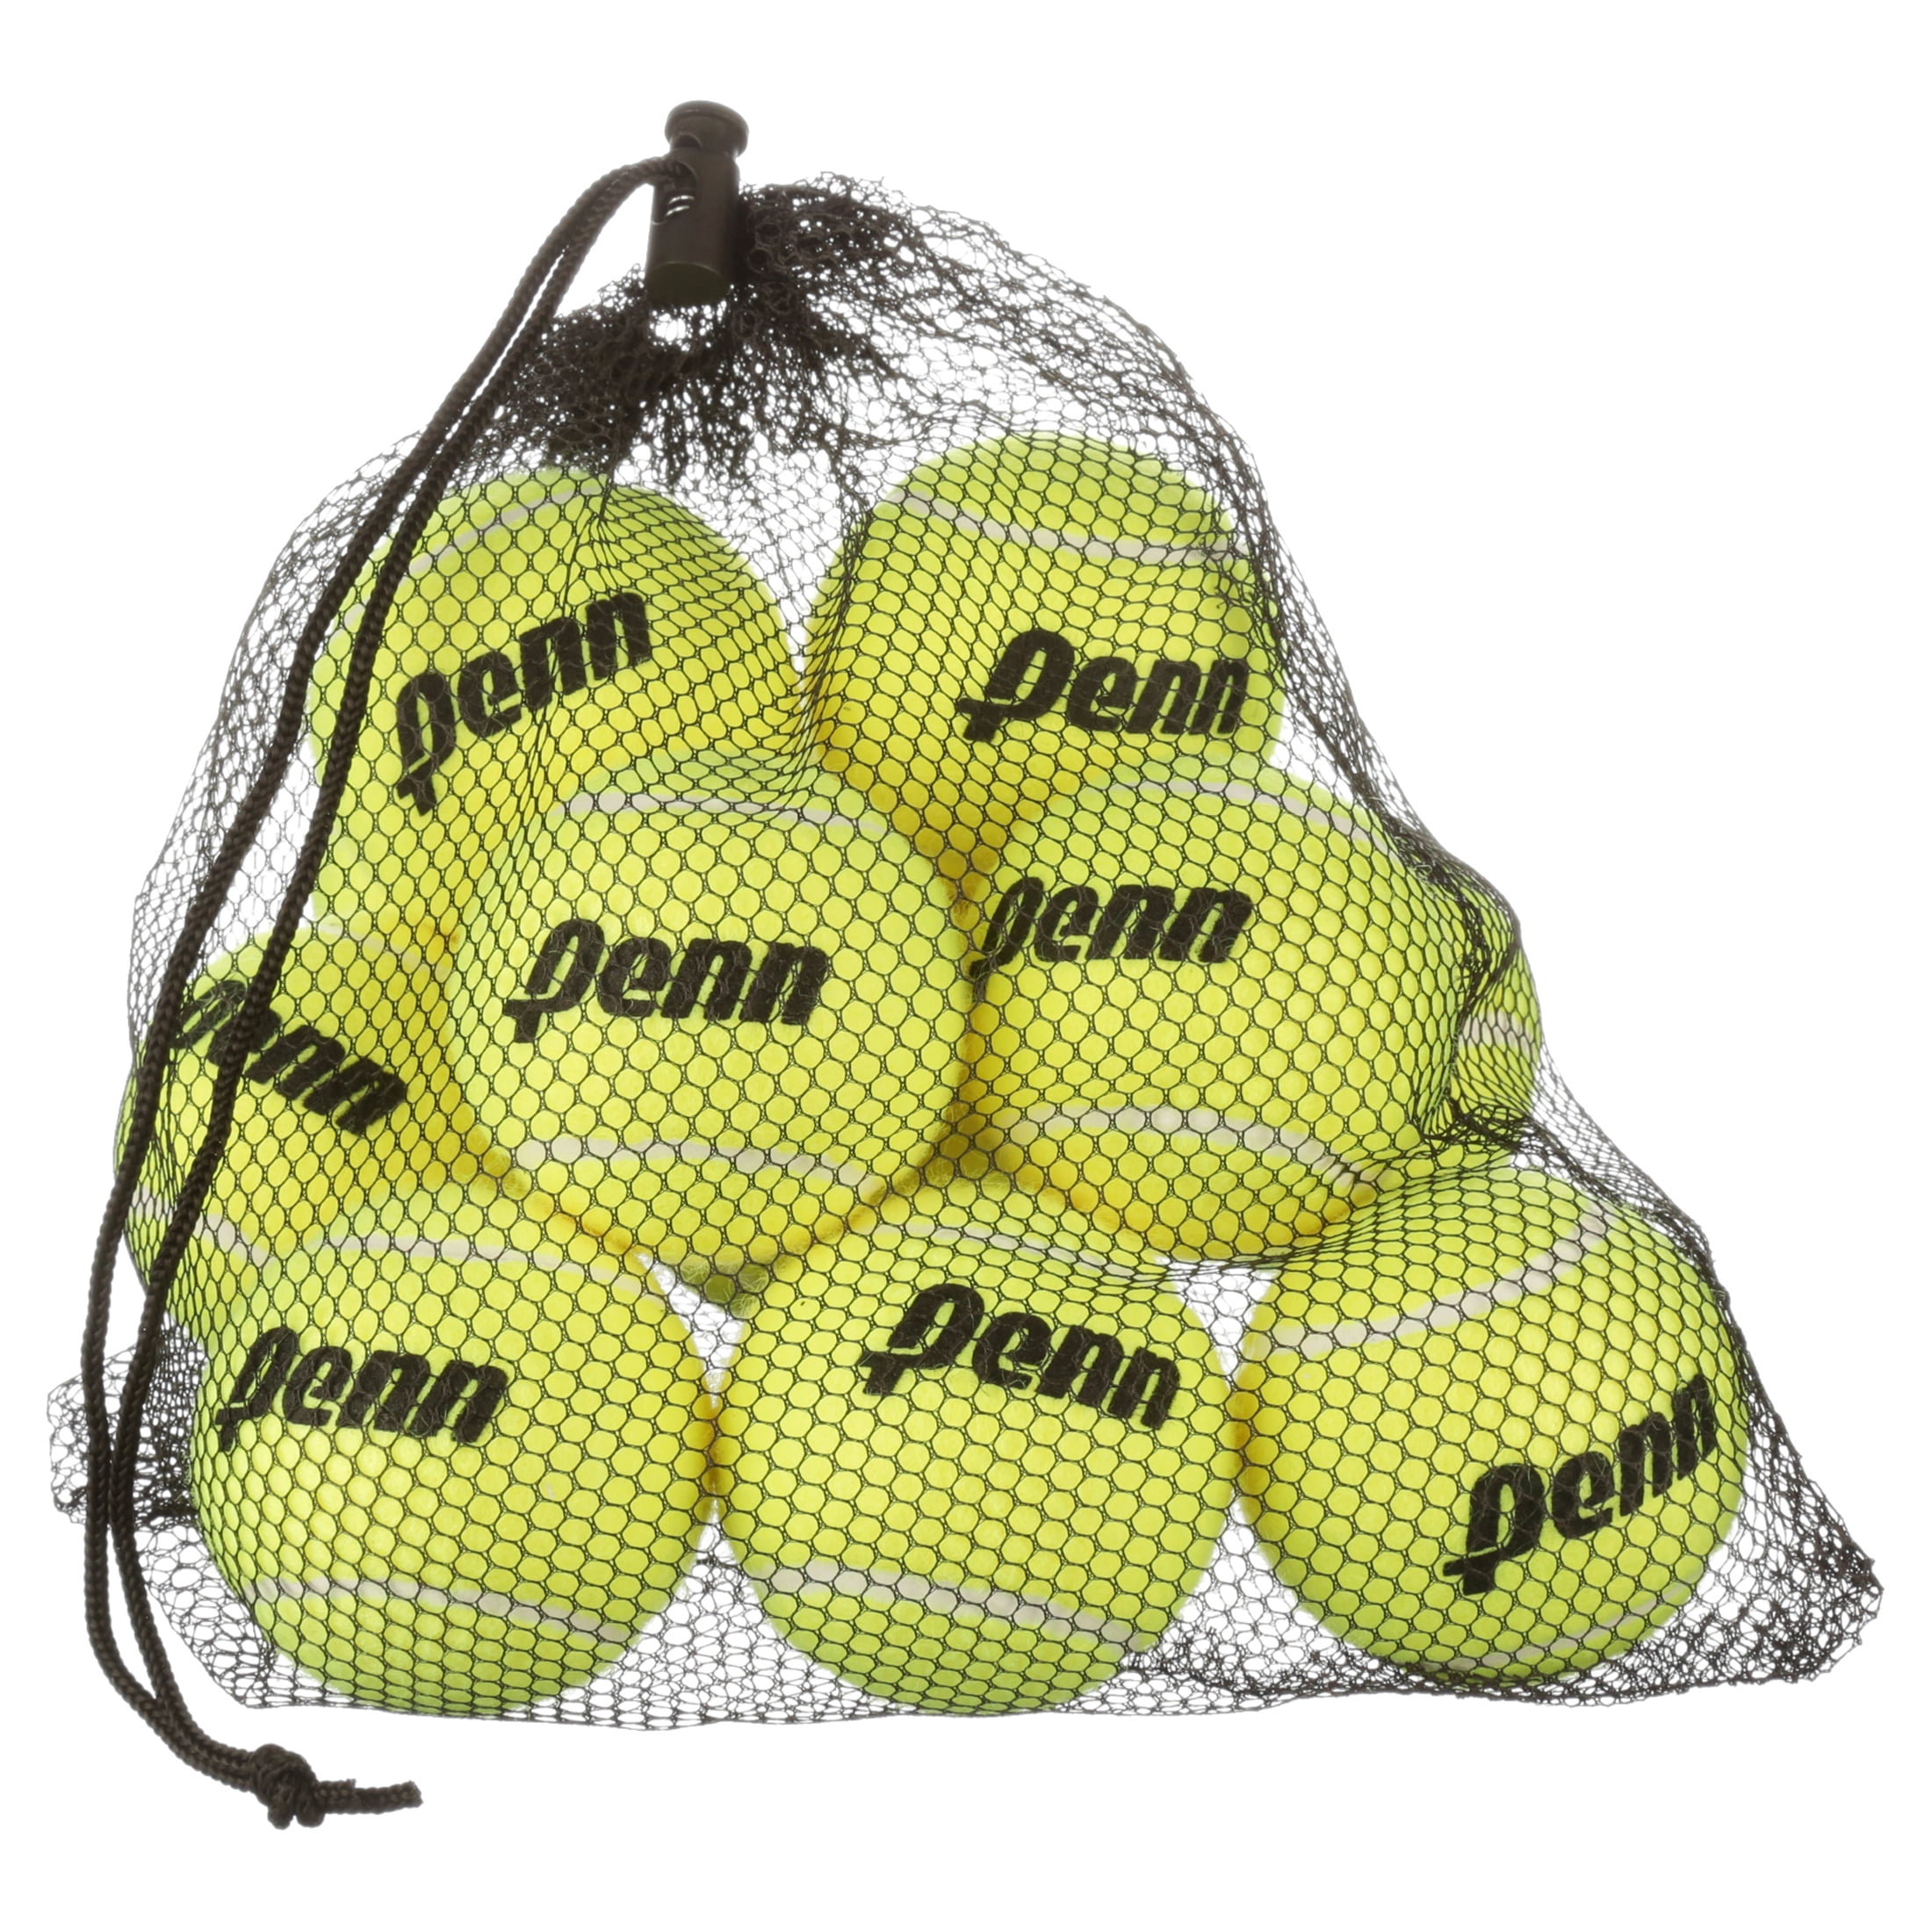 Tennis Balls With Mesh Carry Bag Penn 12 Pressureless for sale online 